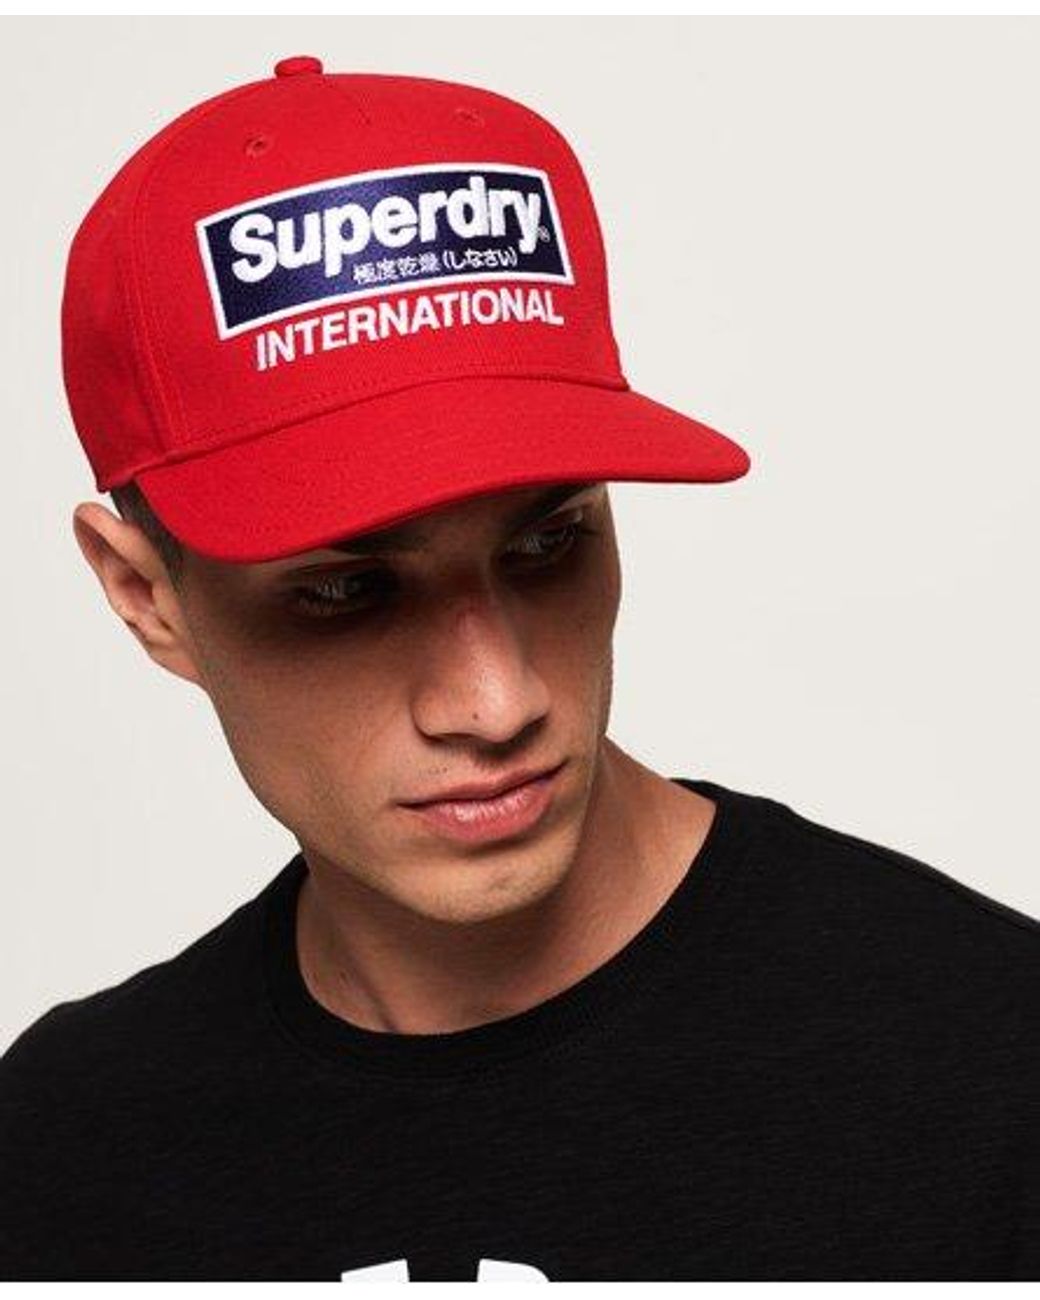 Superdry International B-boy Cap in Red for Men - Save 31% - Lyst